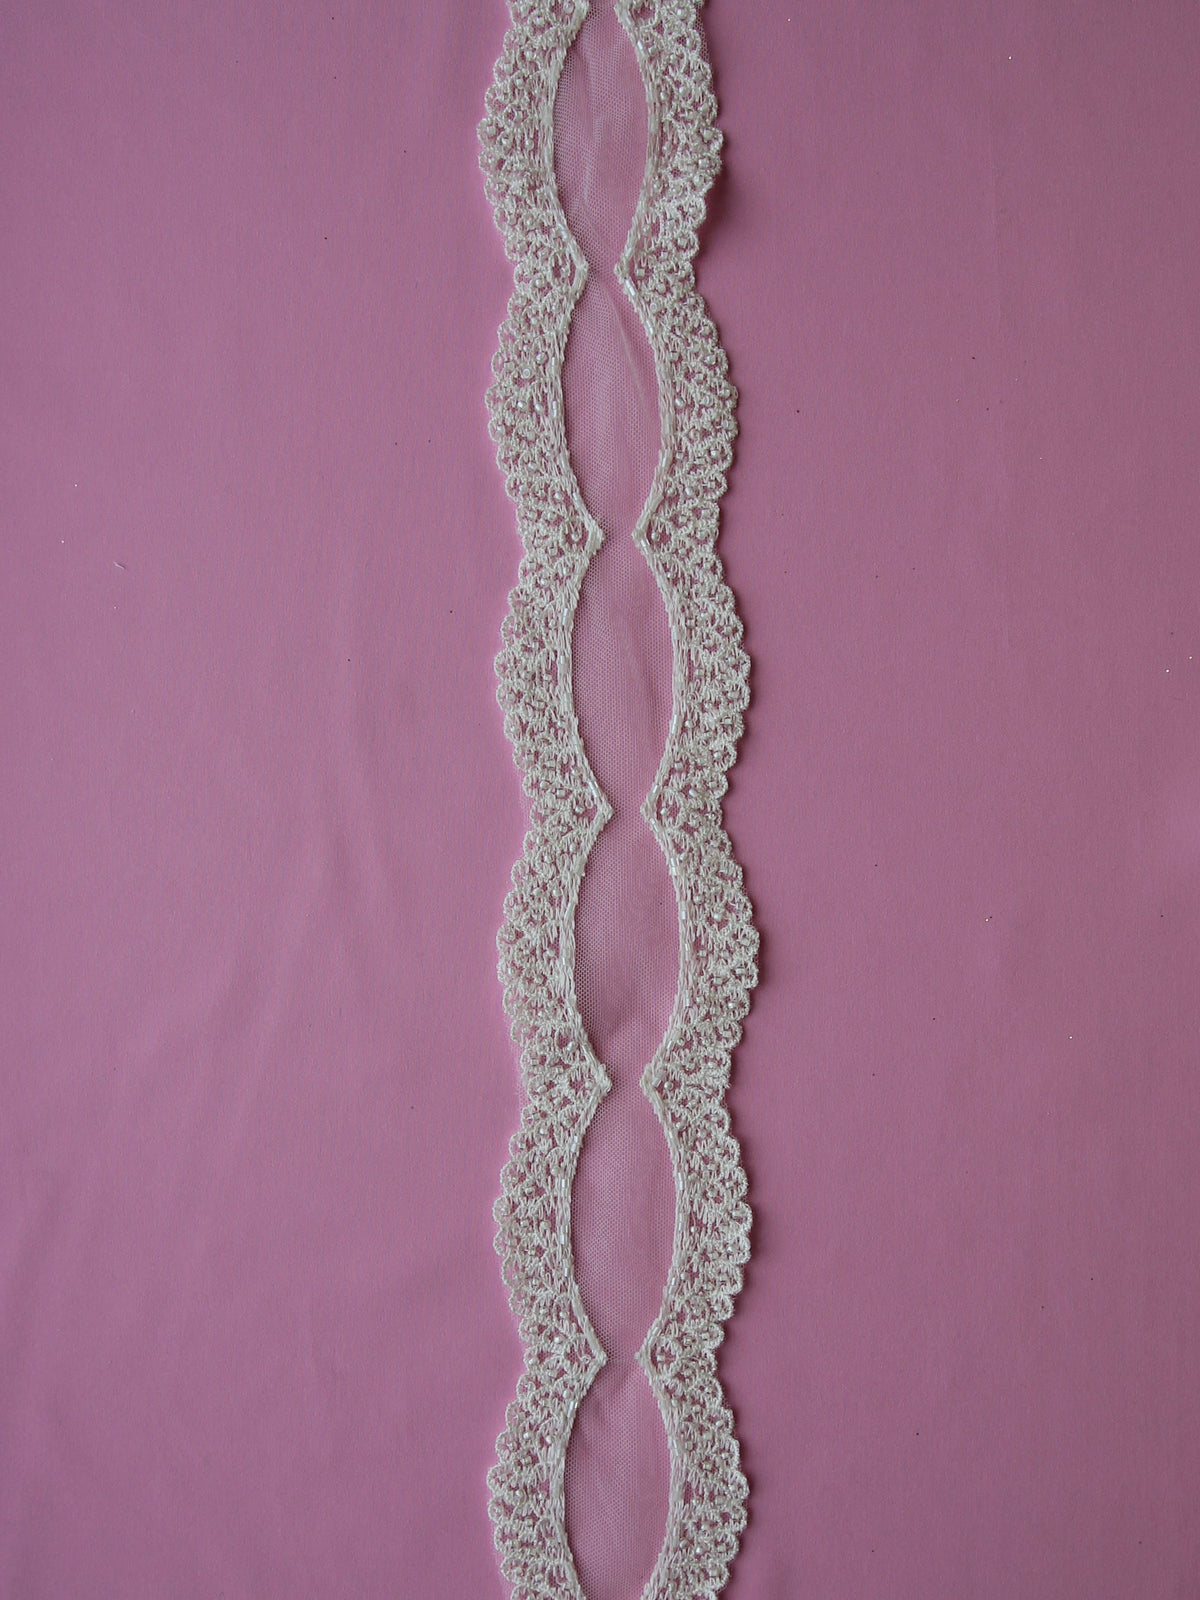 Ivory Beaded Embroidery Lace Trim - Aviana